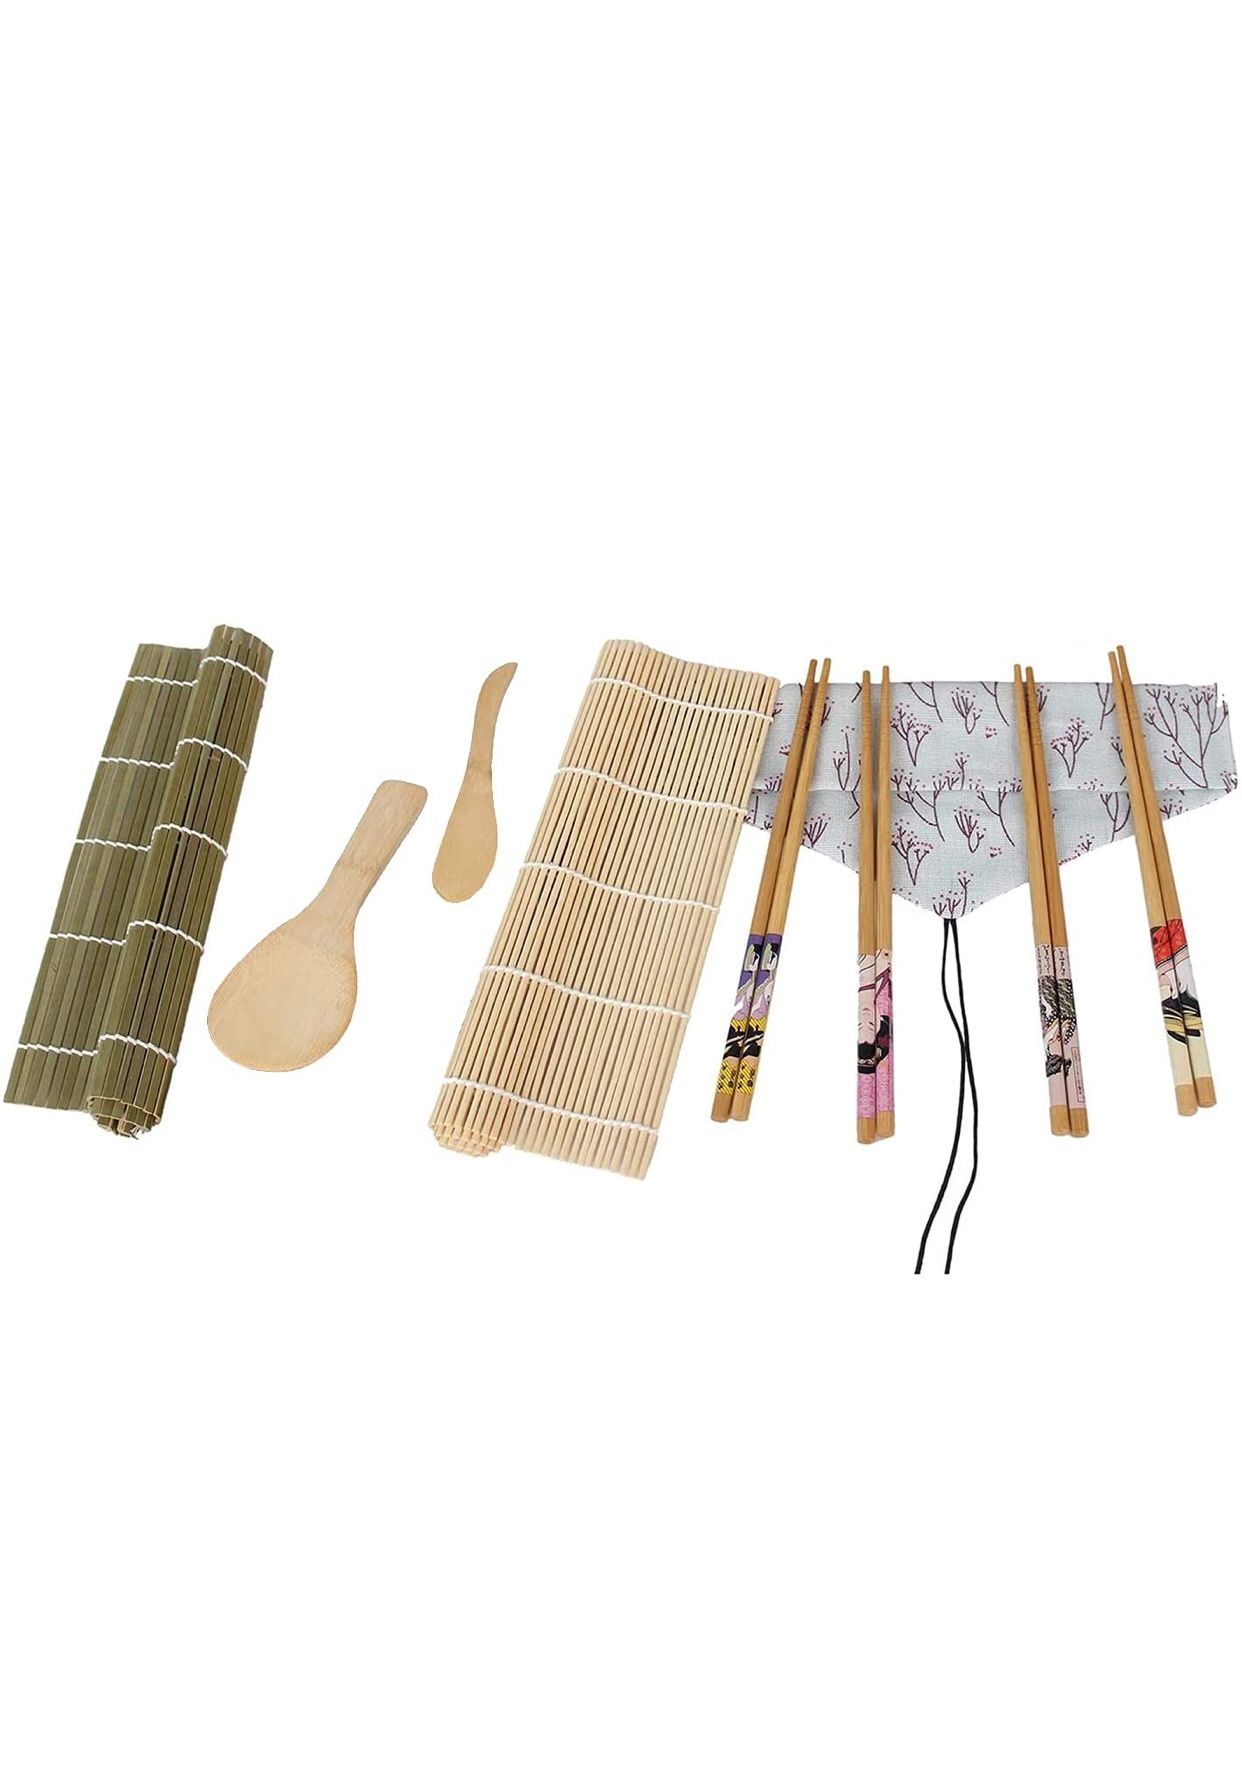 Sushi Making Kit,Bamboo Sushi Mat Diy Sushi Mould Includes 2 Sushi Roll Mats, 4 Pairs Of Chopsticks Paddle Bamboo Sushi Rolling Mat Kit